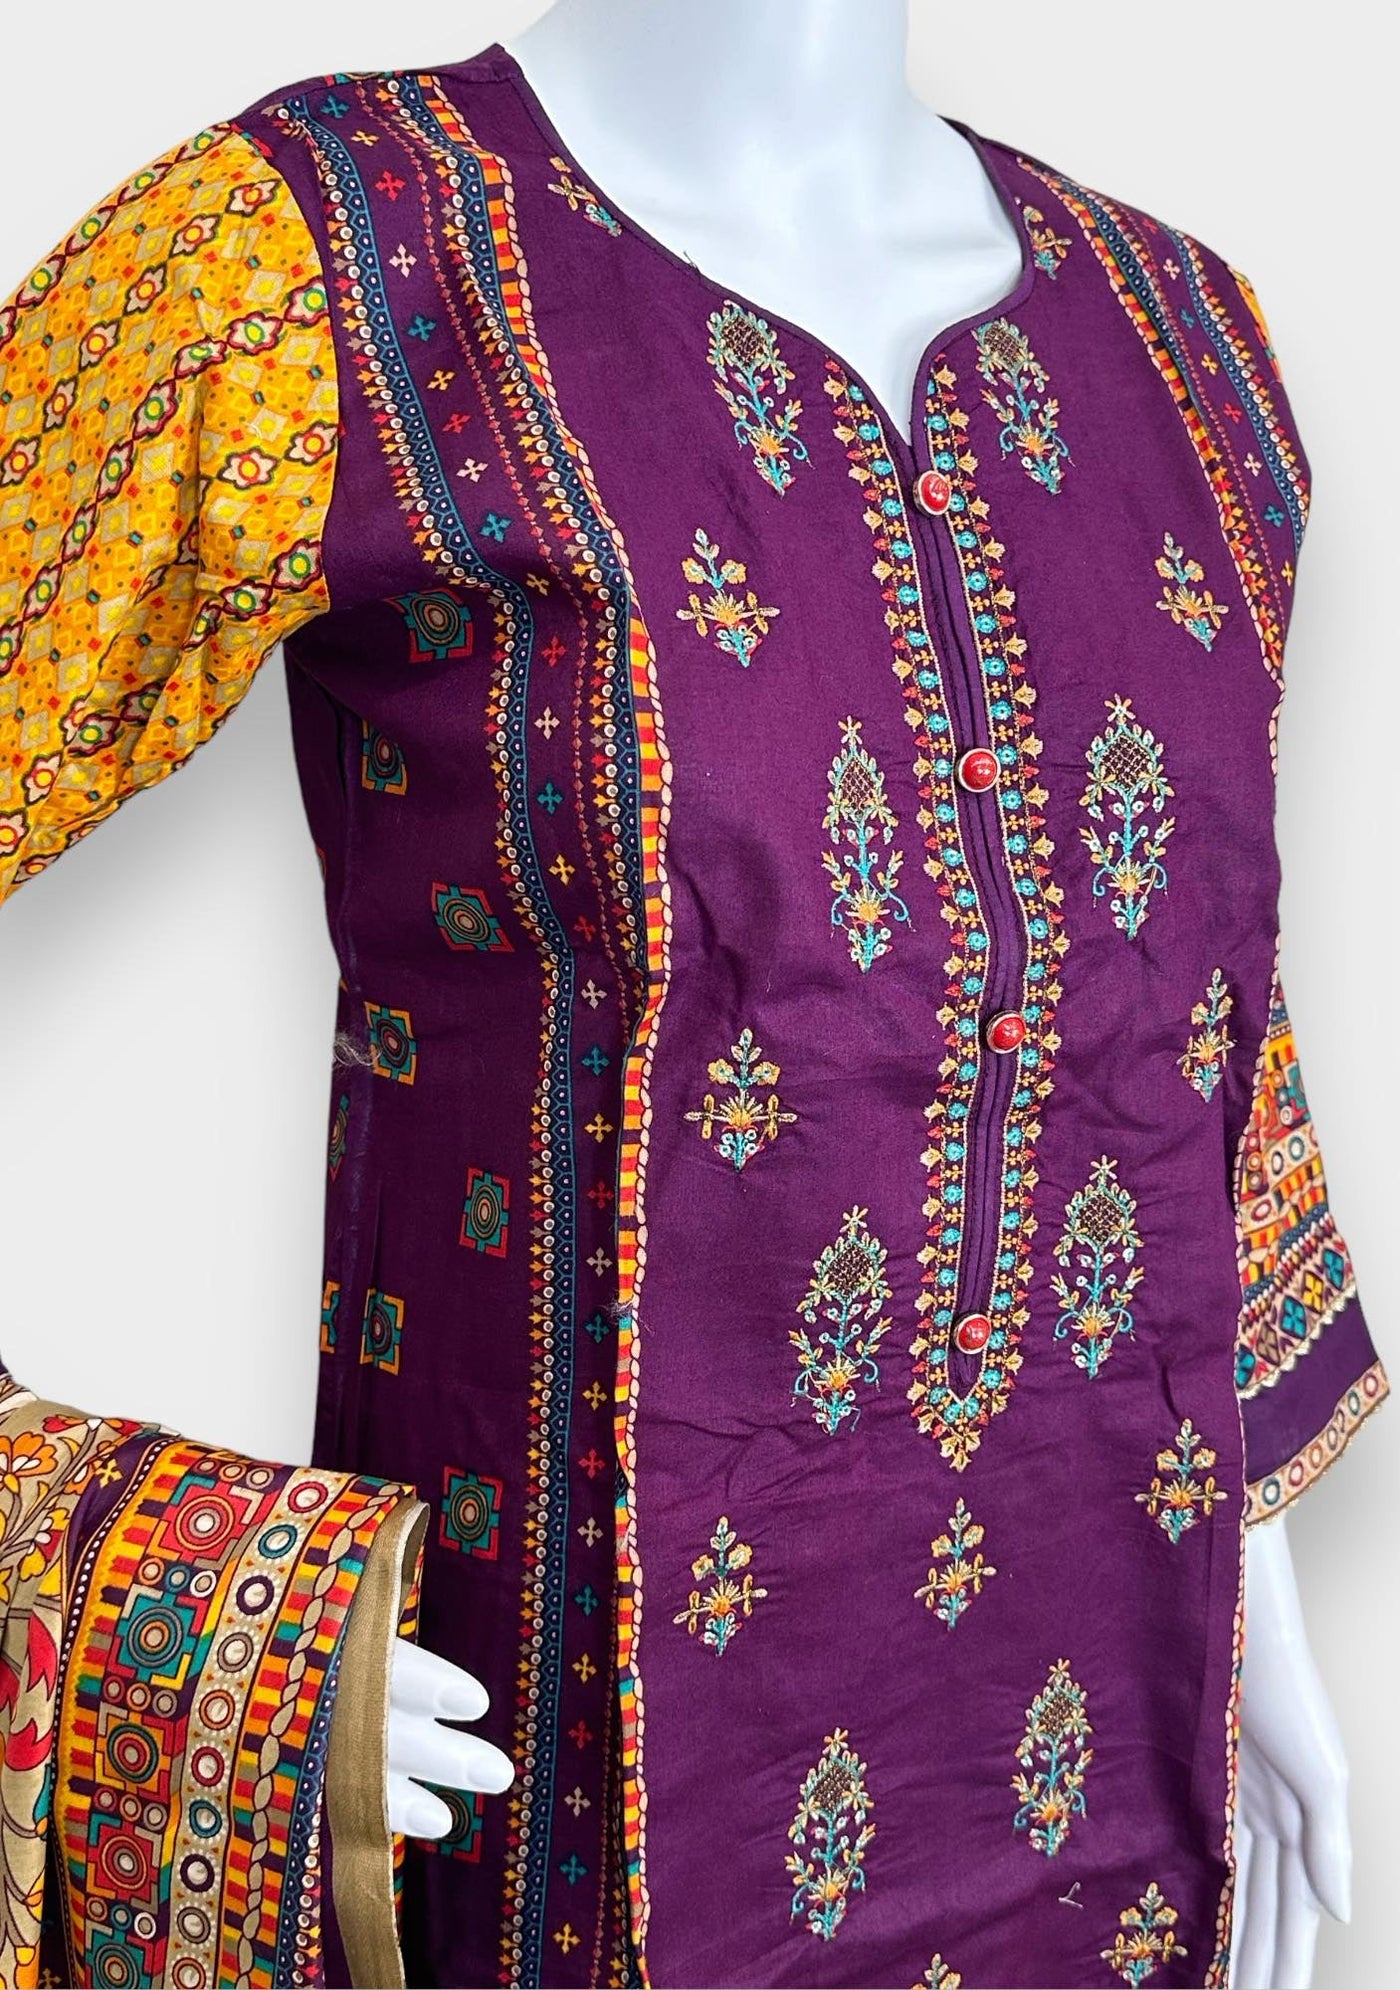 Embroidered 3 Pieces Pakistani Cotton Dress - db25696